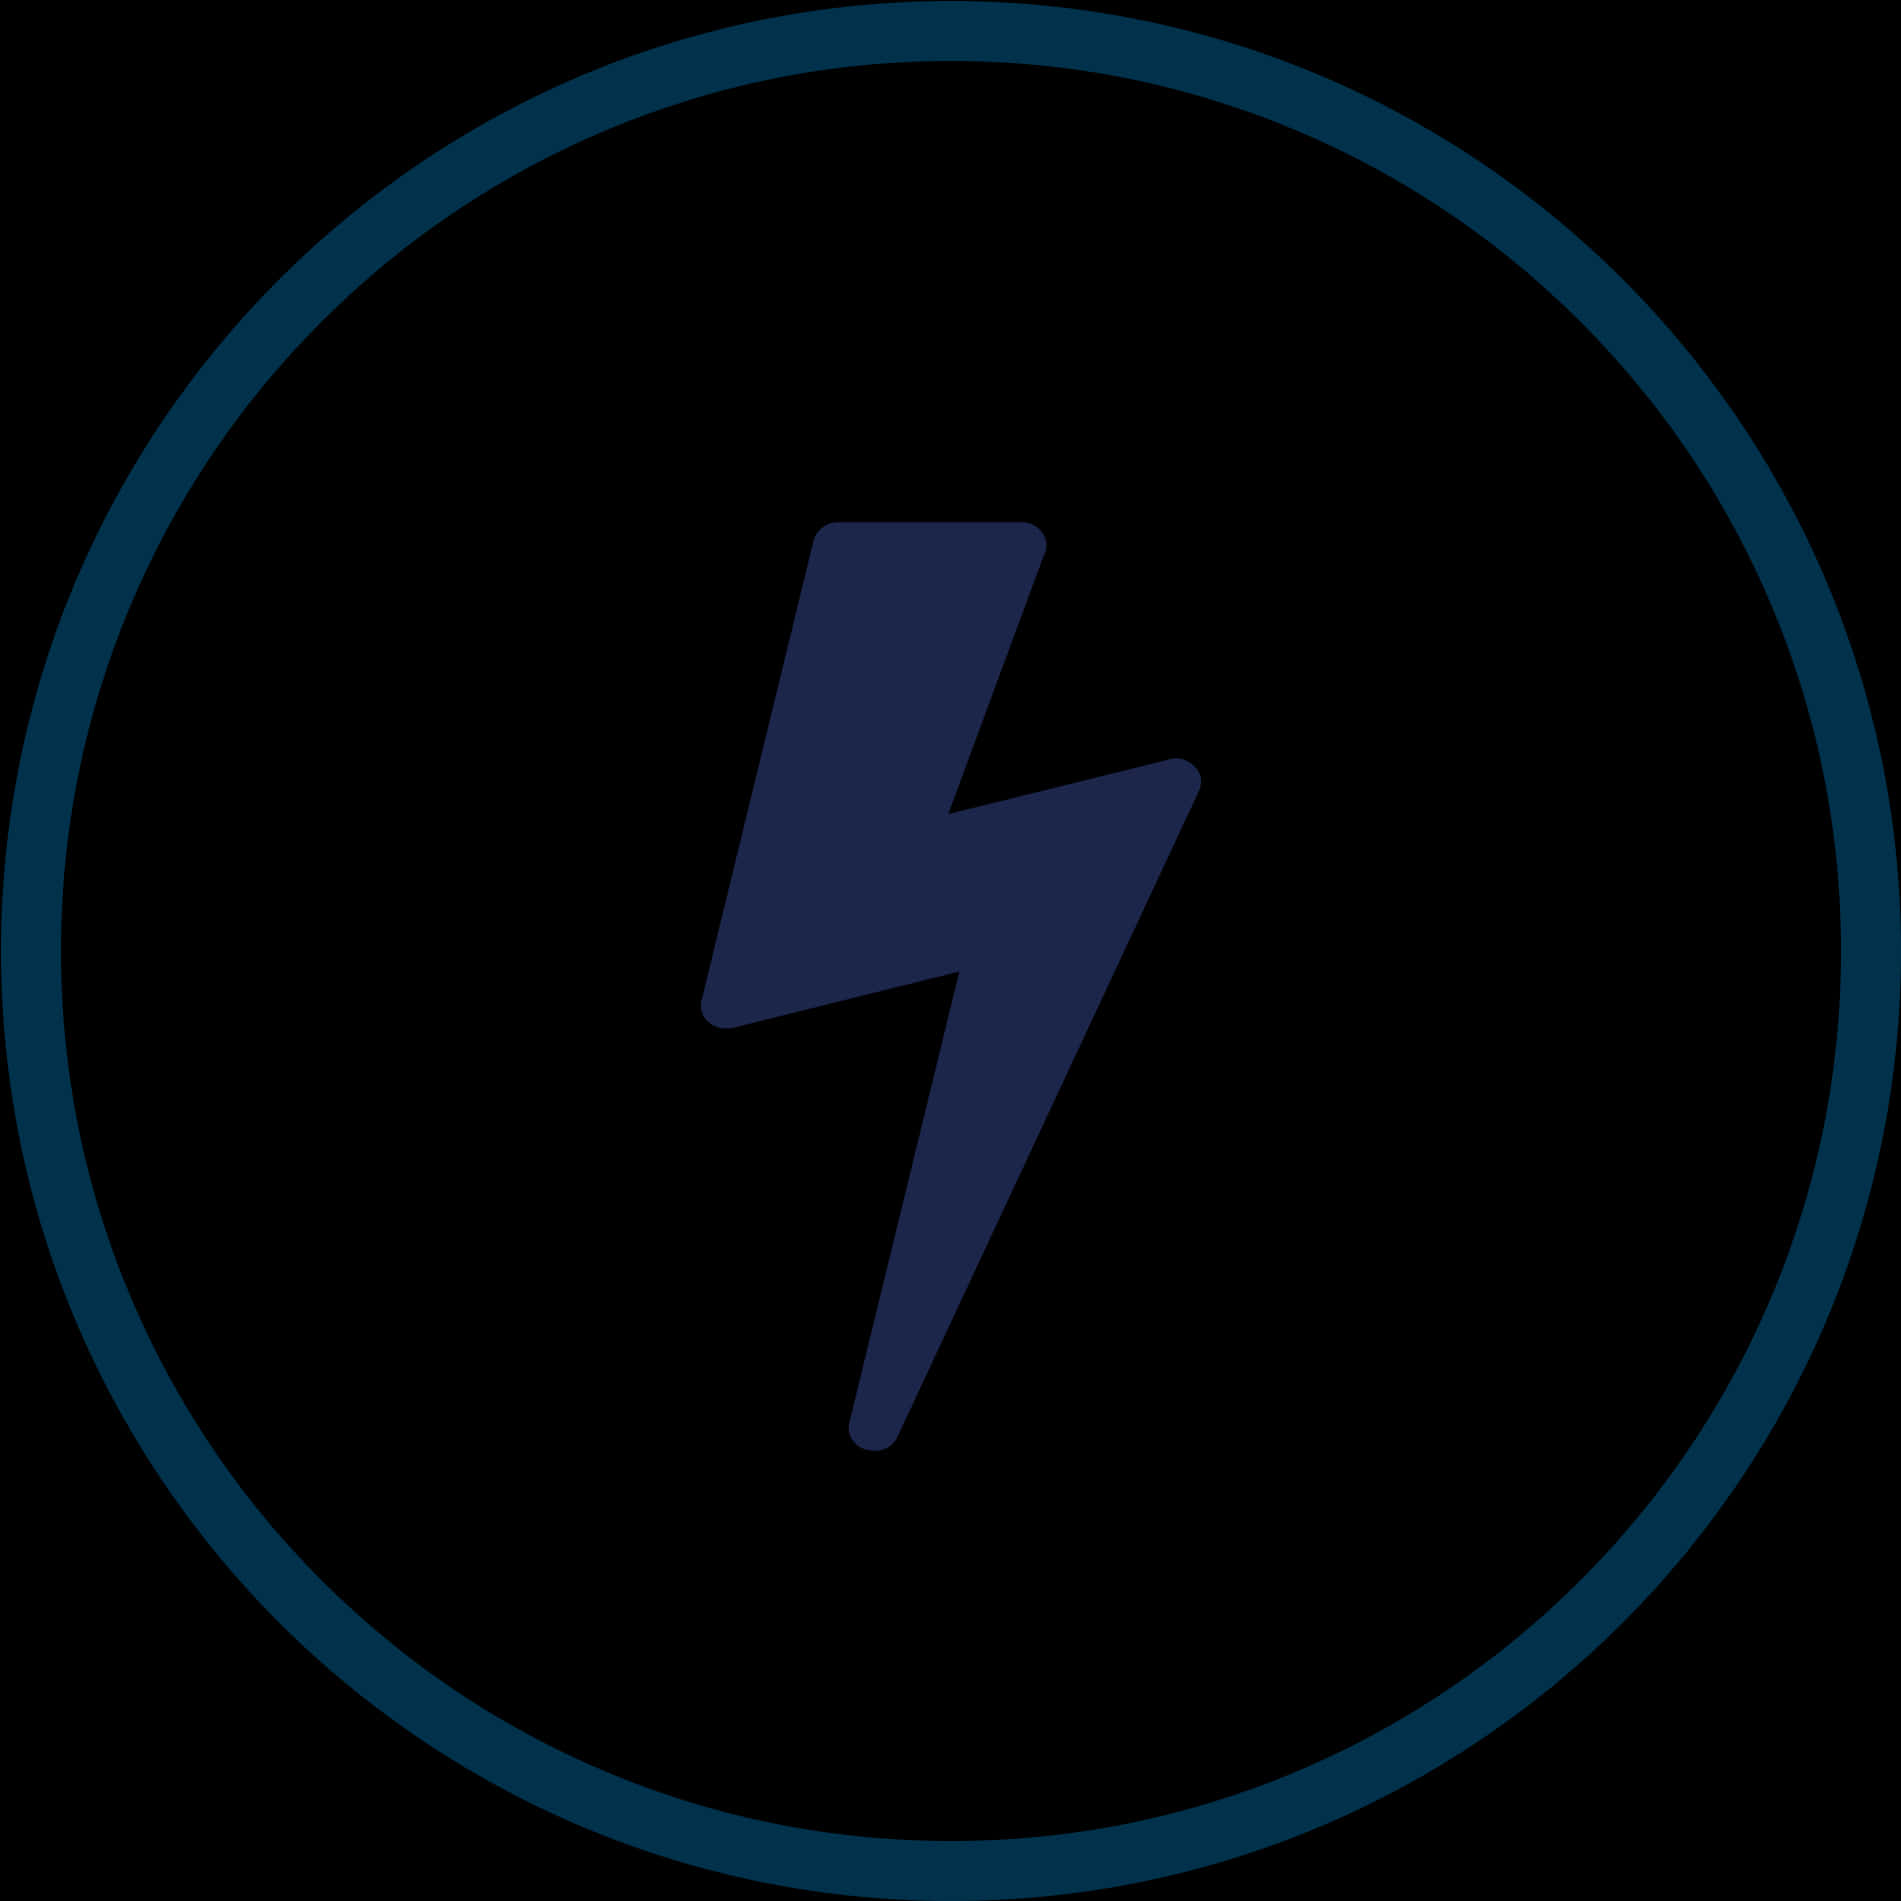 A Blue Lightning Bolt In A Circle